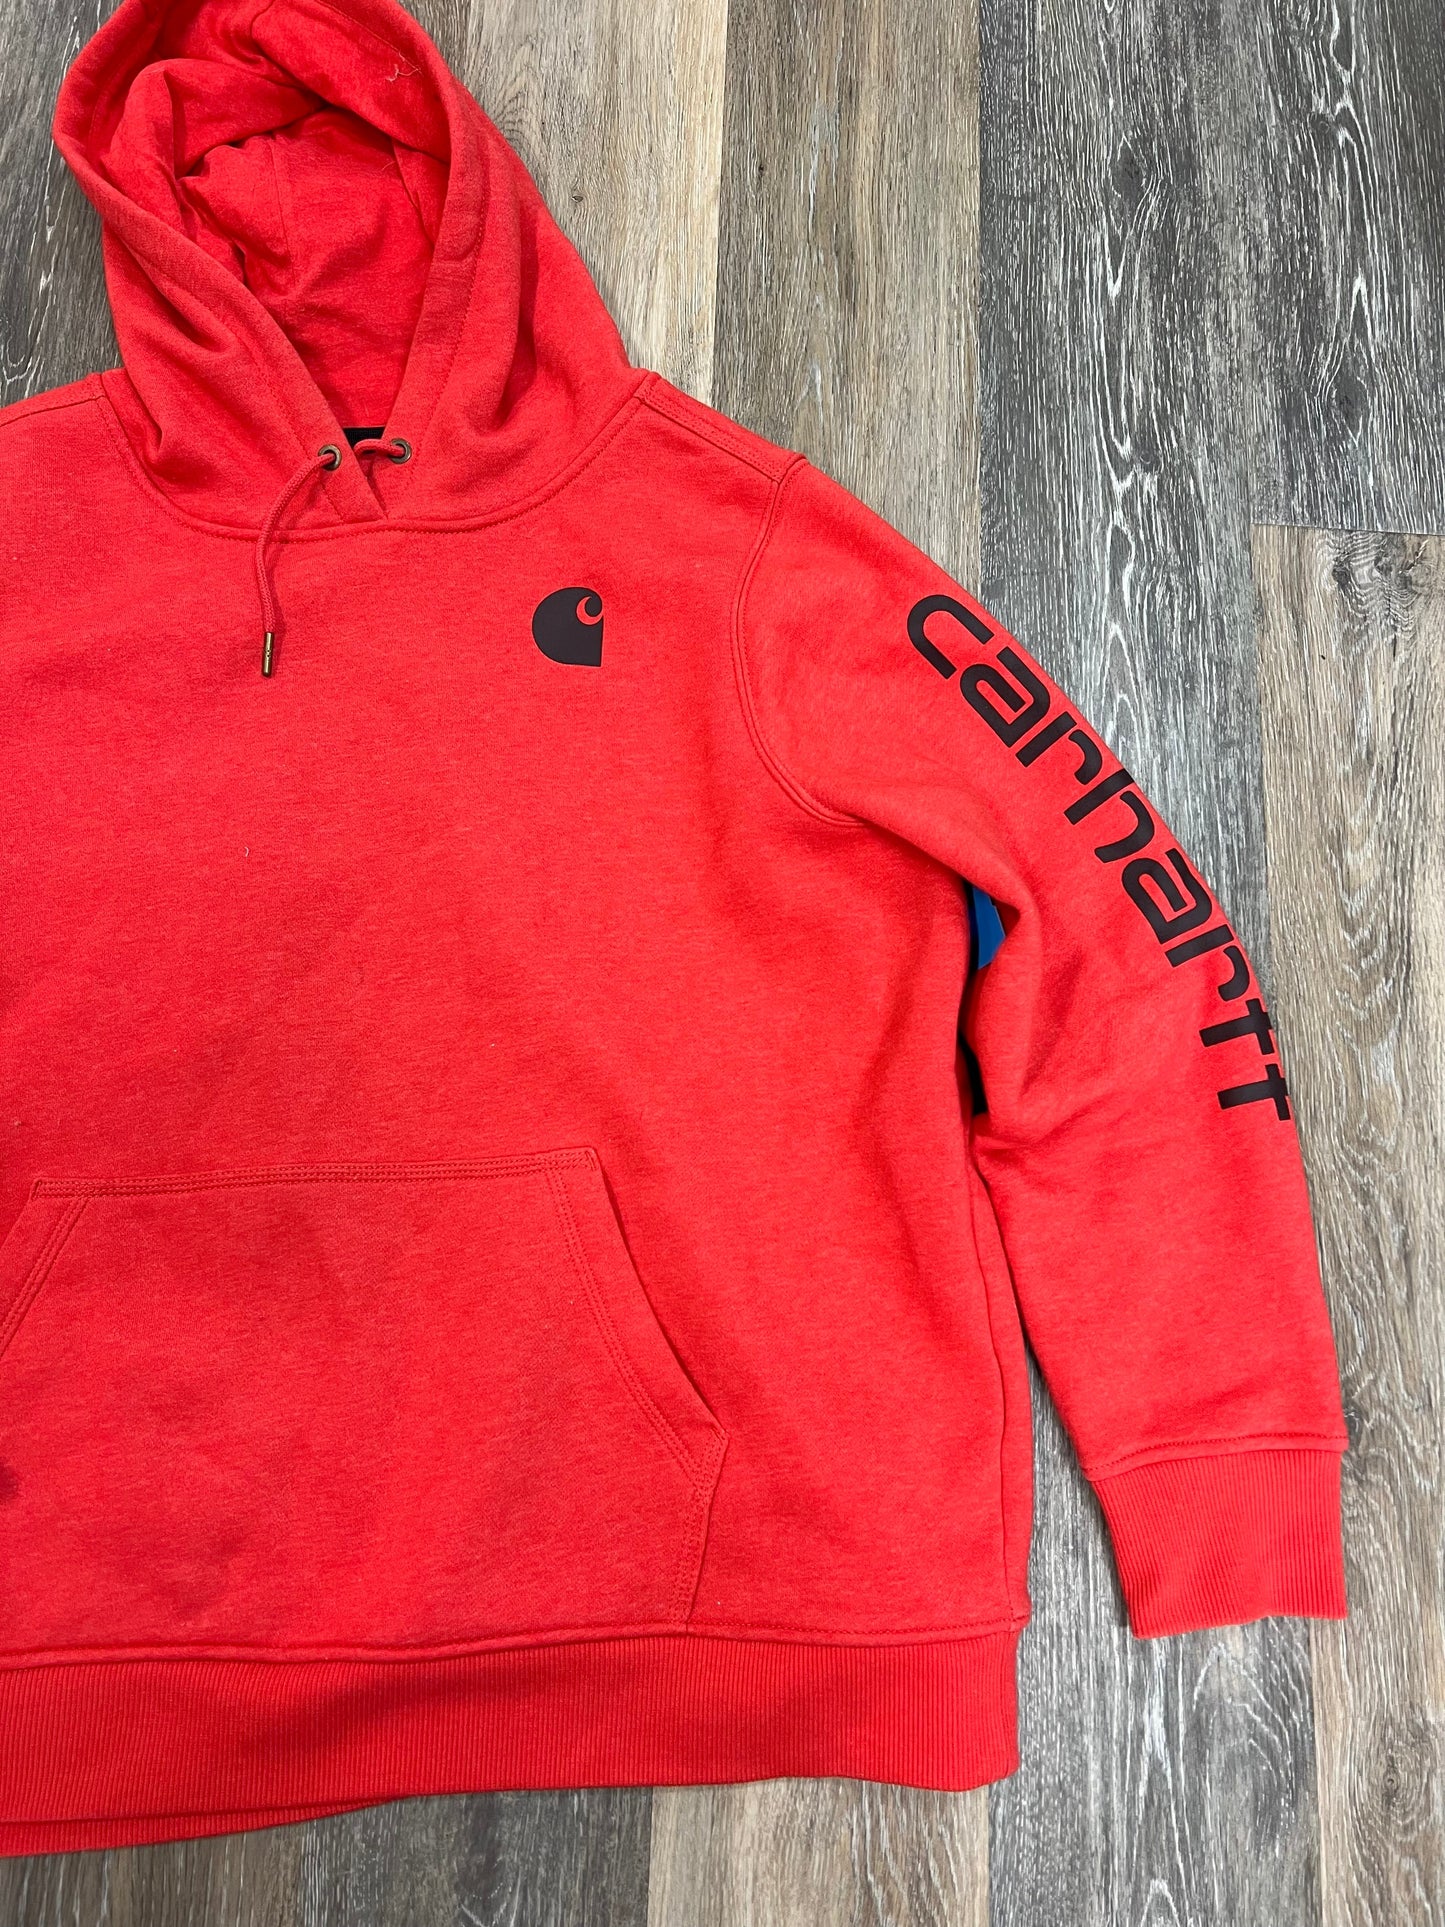 Red Athletic Sweatshirt Hoodie Carhartt, Size Xxl